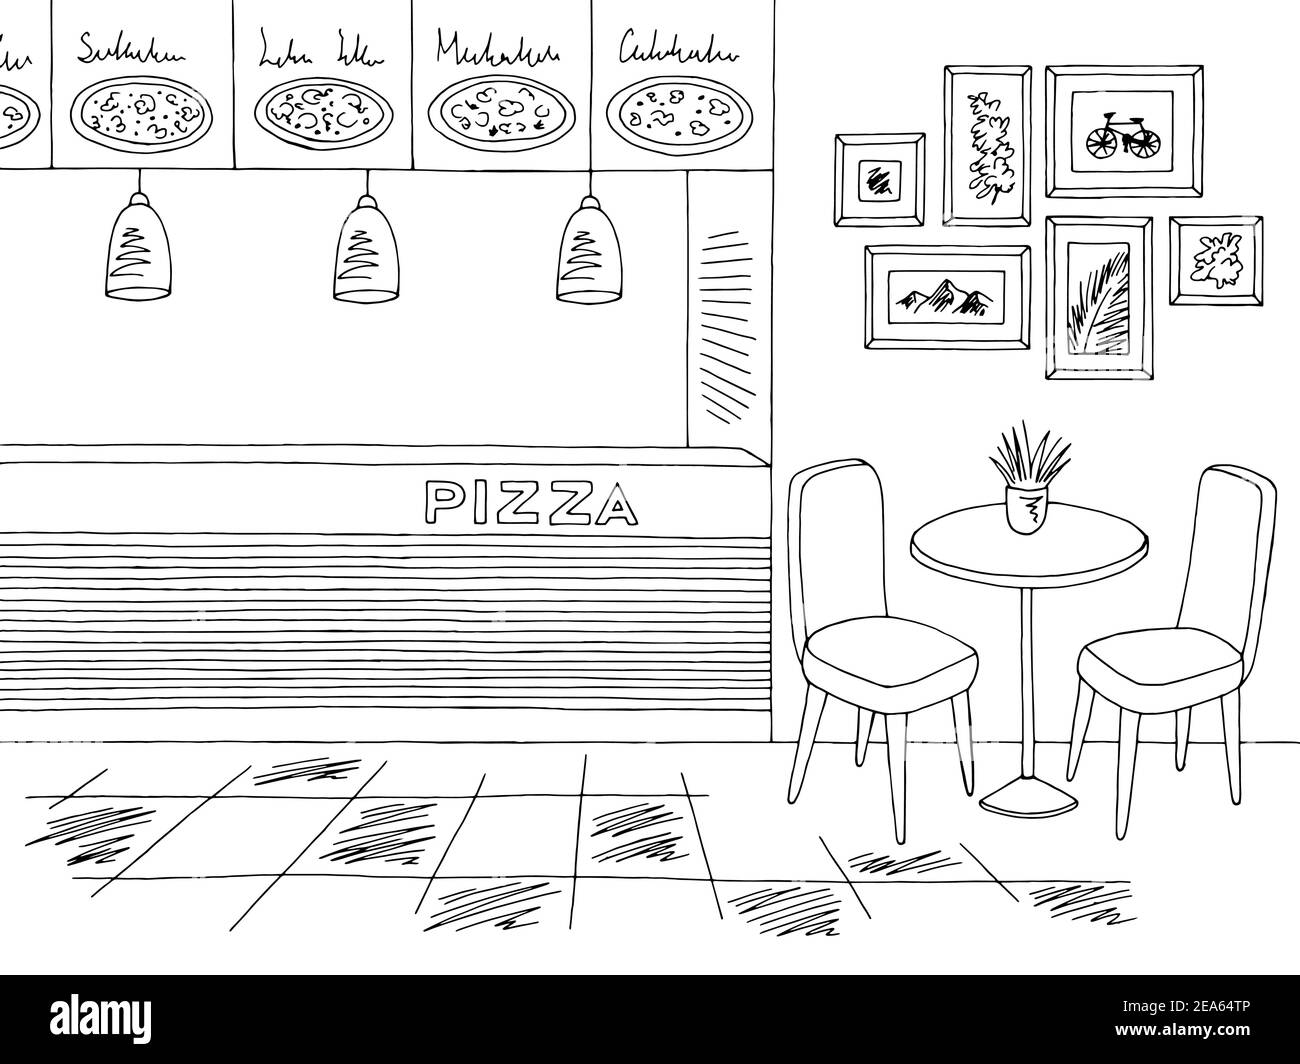 Pizza Restaurant Interieur Fast Food Court Grafik schwarz weiß Skizze Illustrationsvektor Stock Vektor